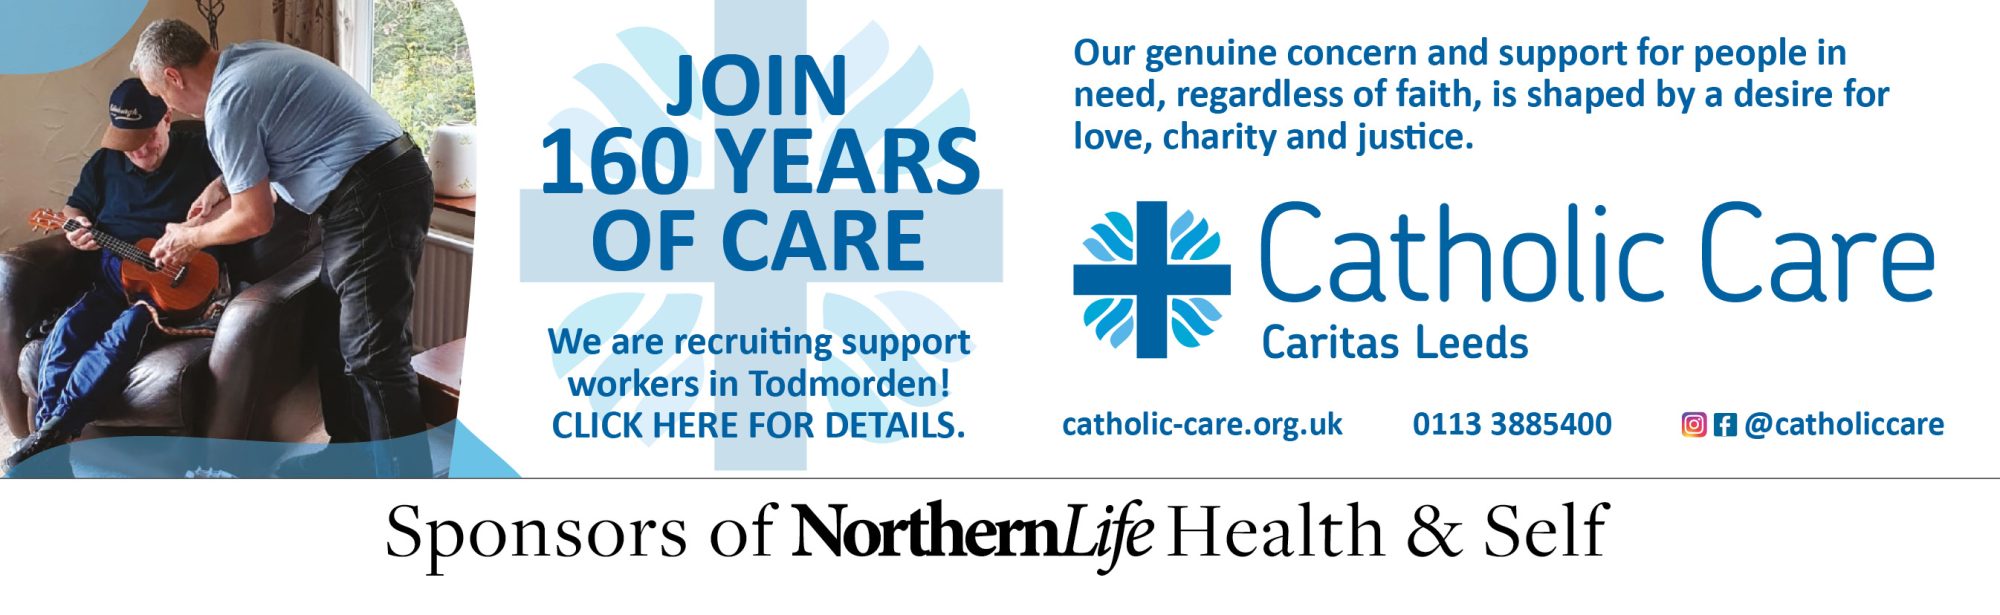 Catholic Care Northern Life Web Banner Sponsorship